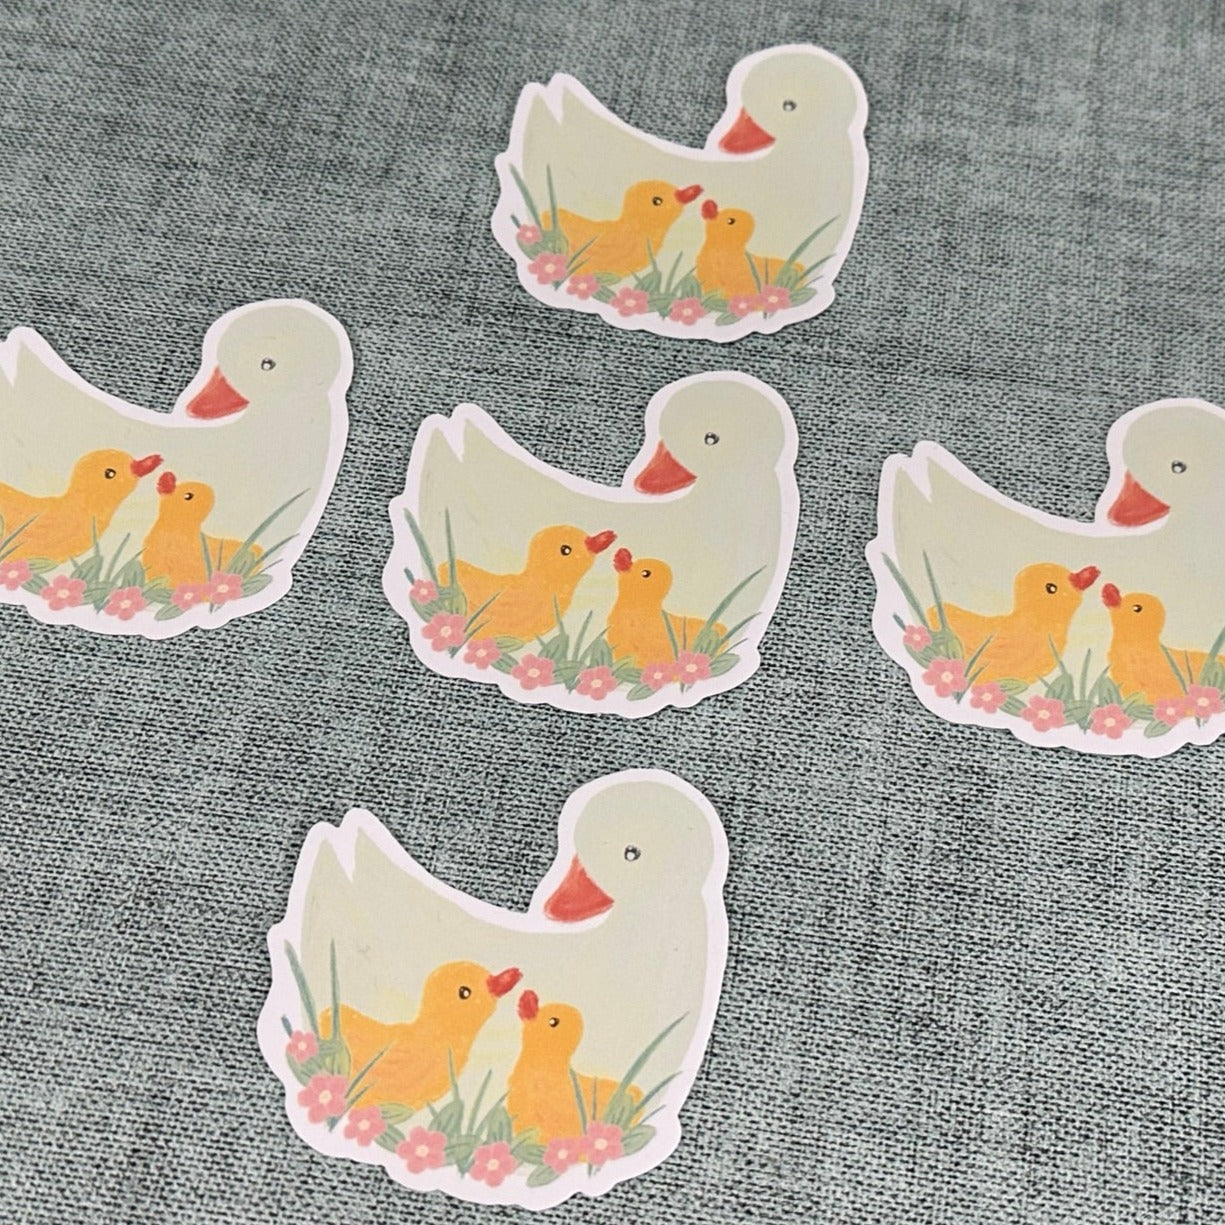 Duck and Ducklings Waterproof Vinyl Sticker